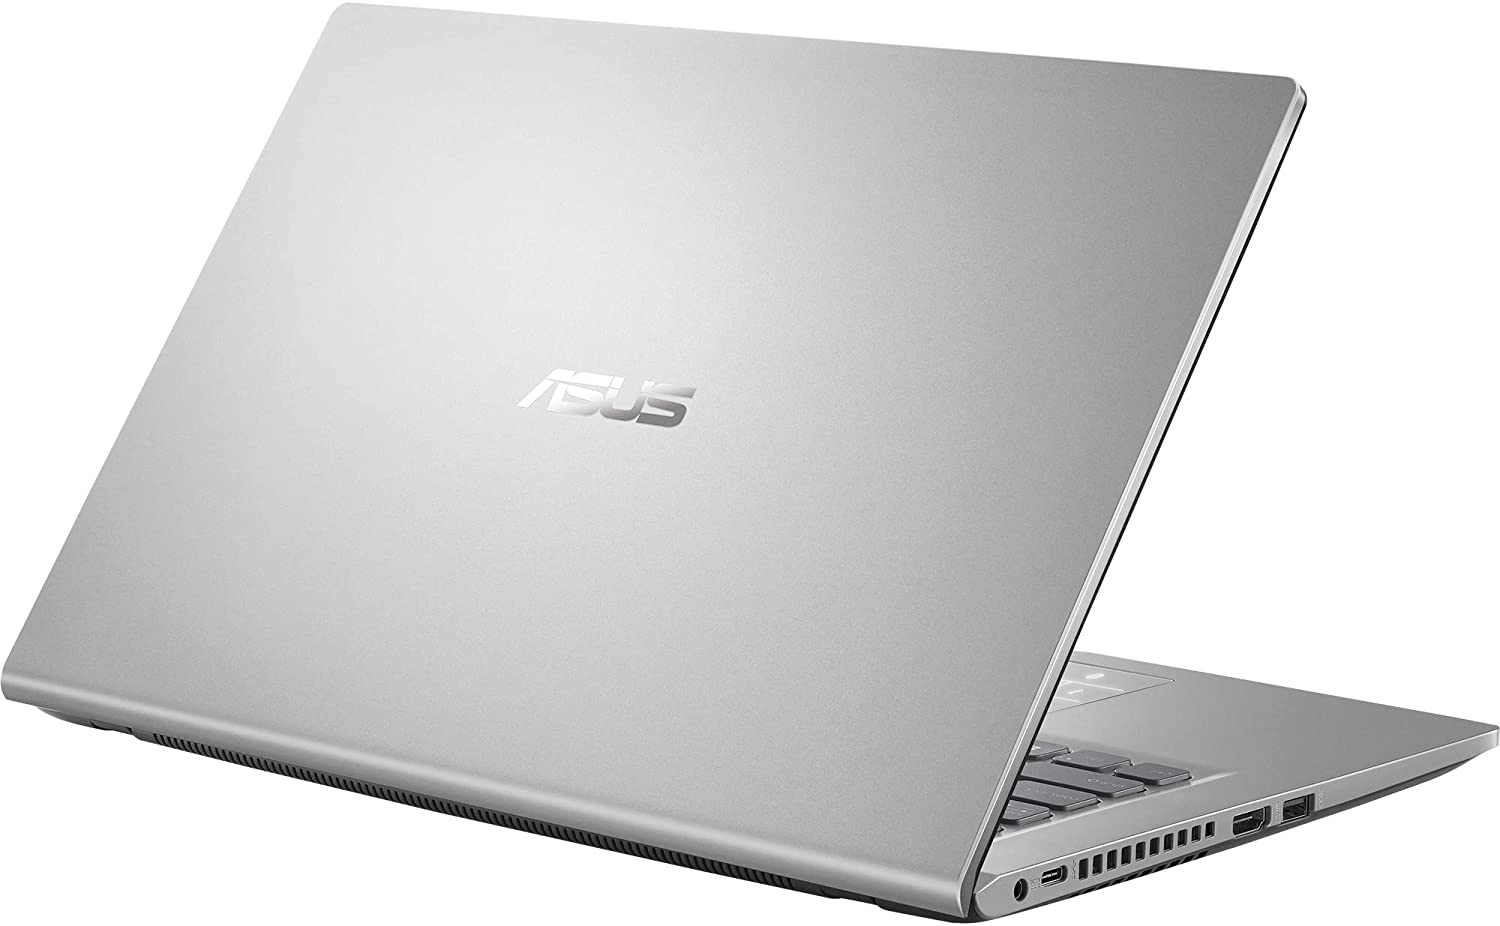 Asus F415JA-EK398 laptop image